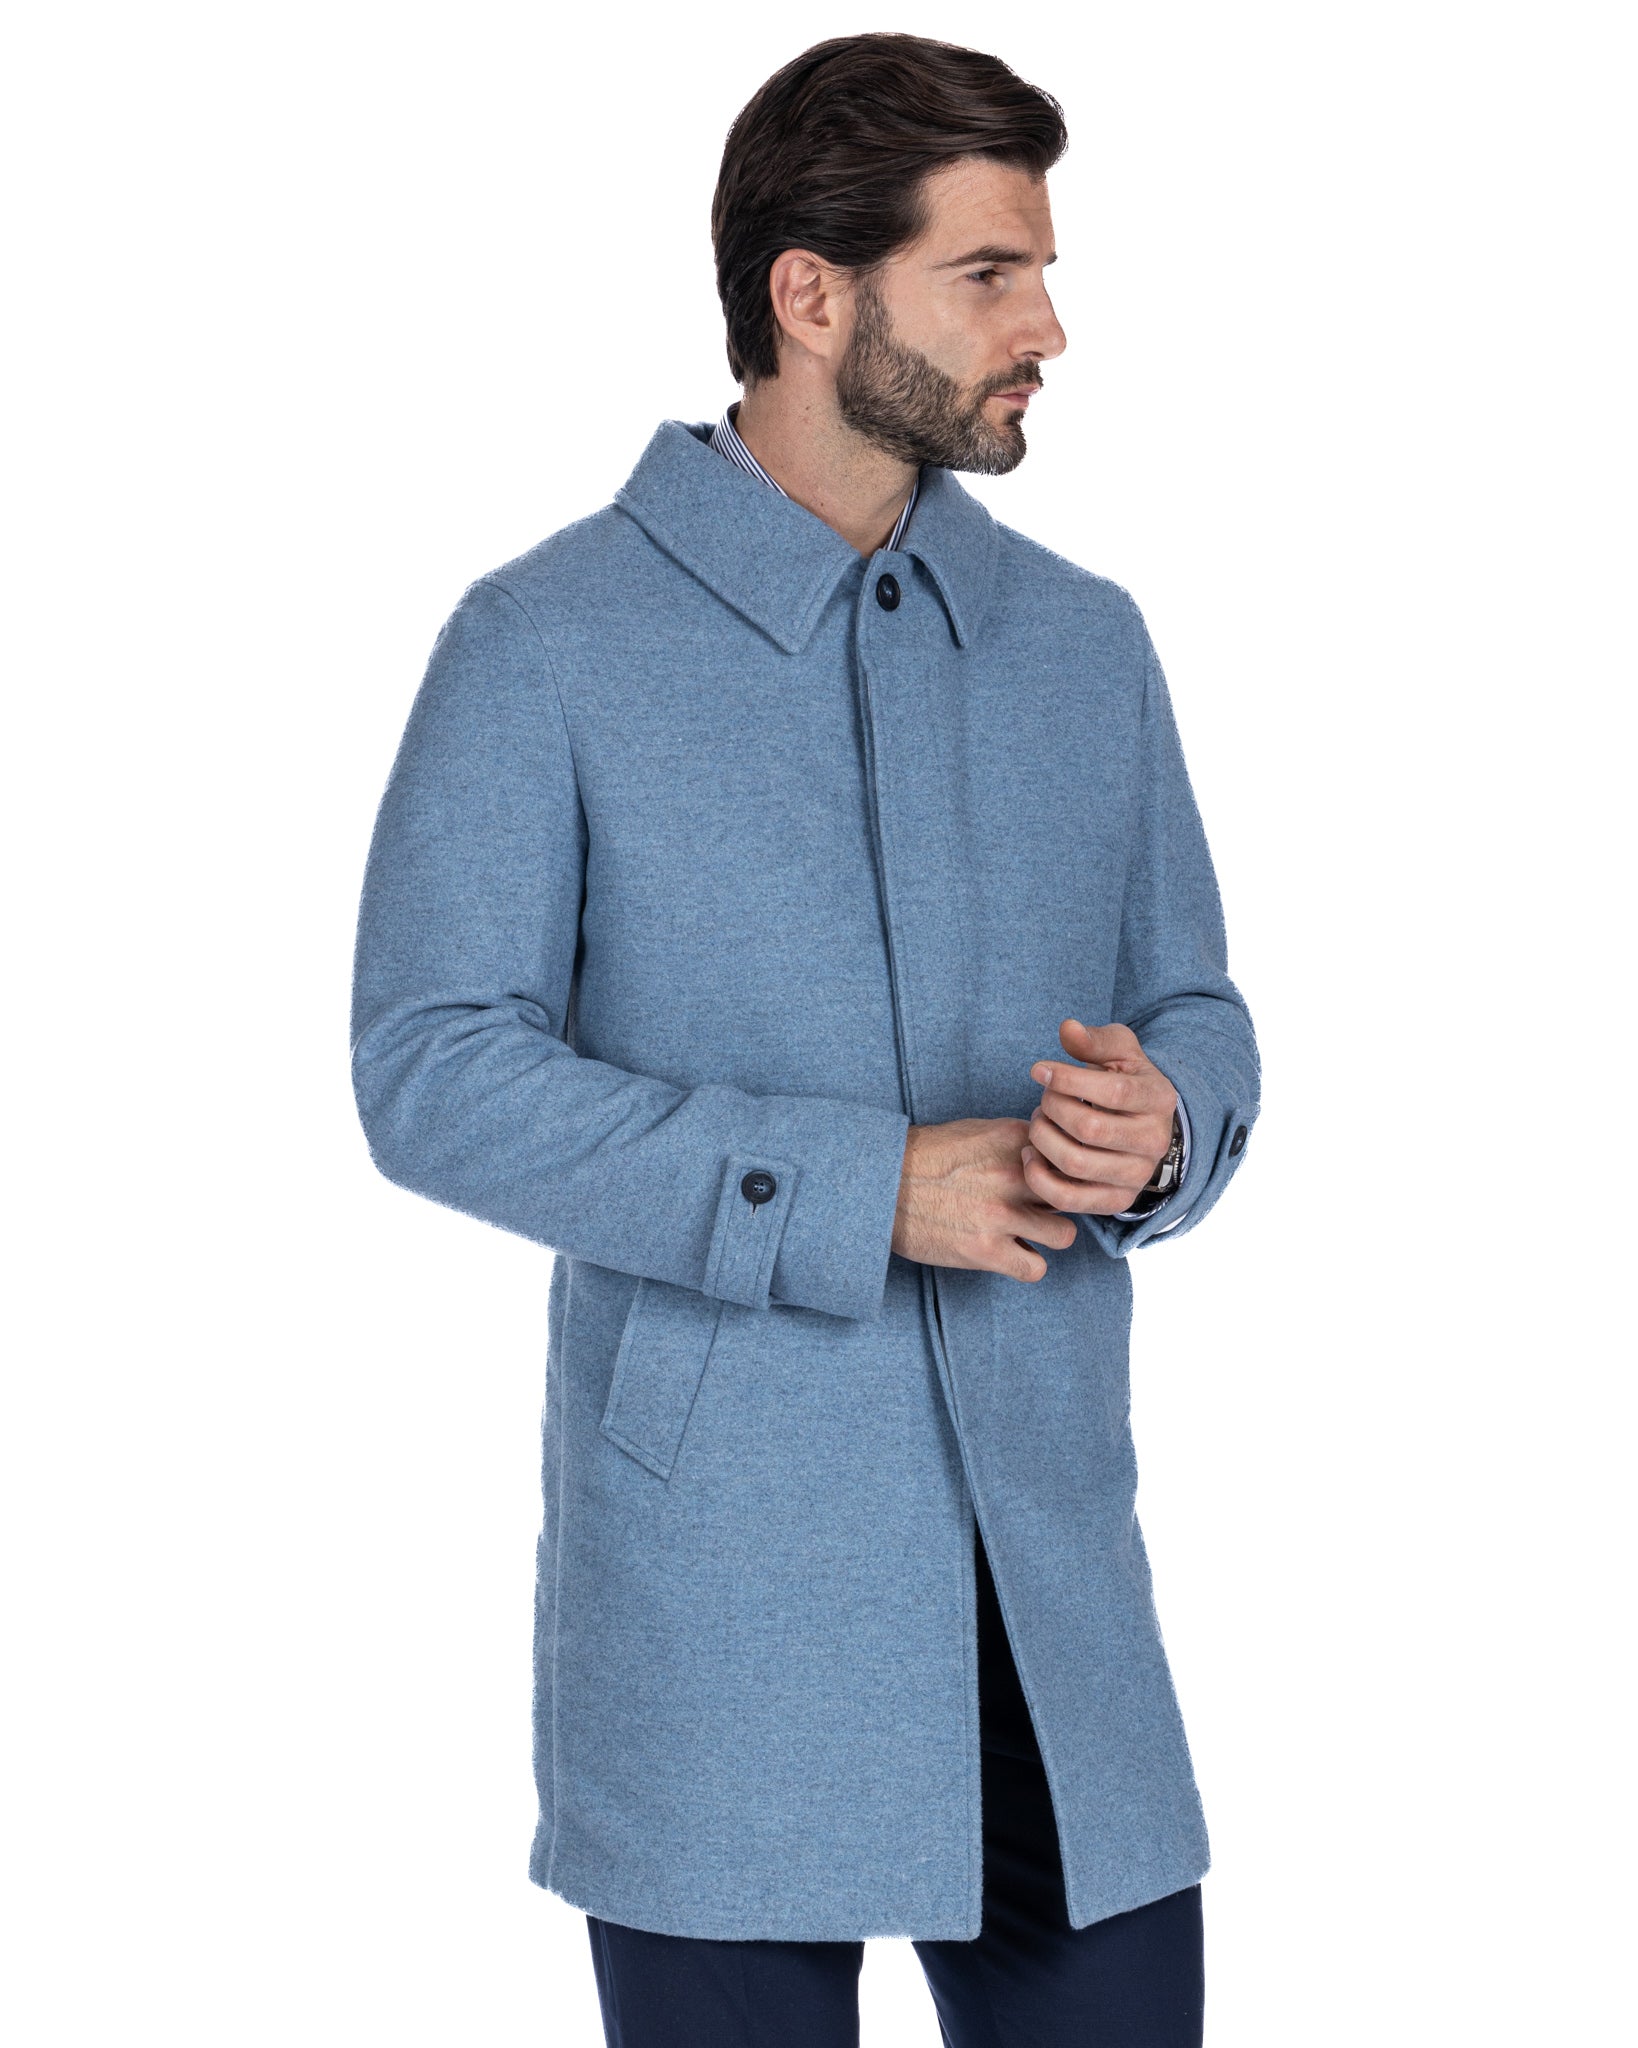 Jean - light blue single-breasted coat